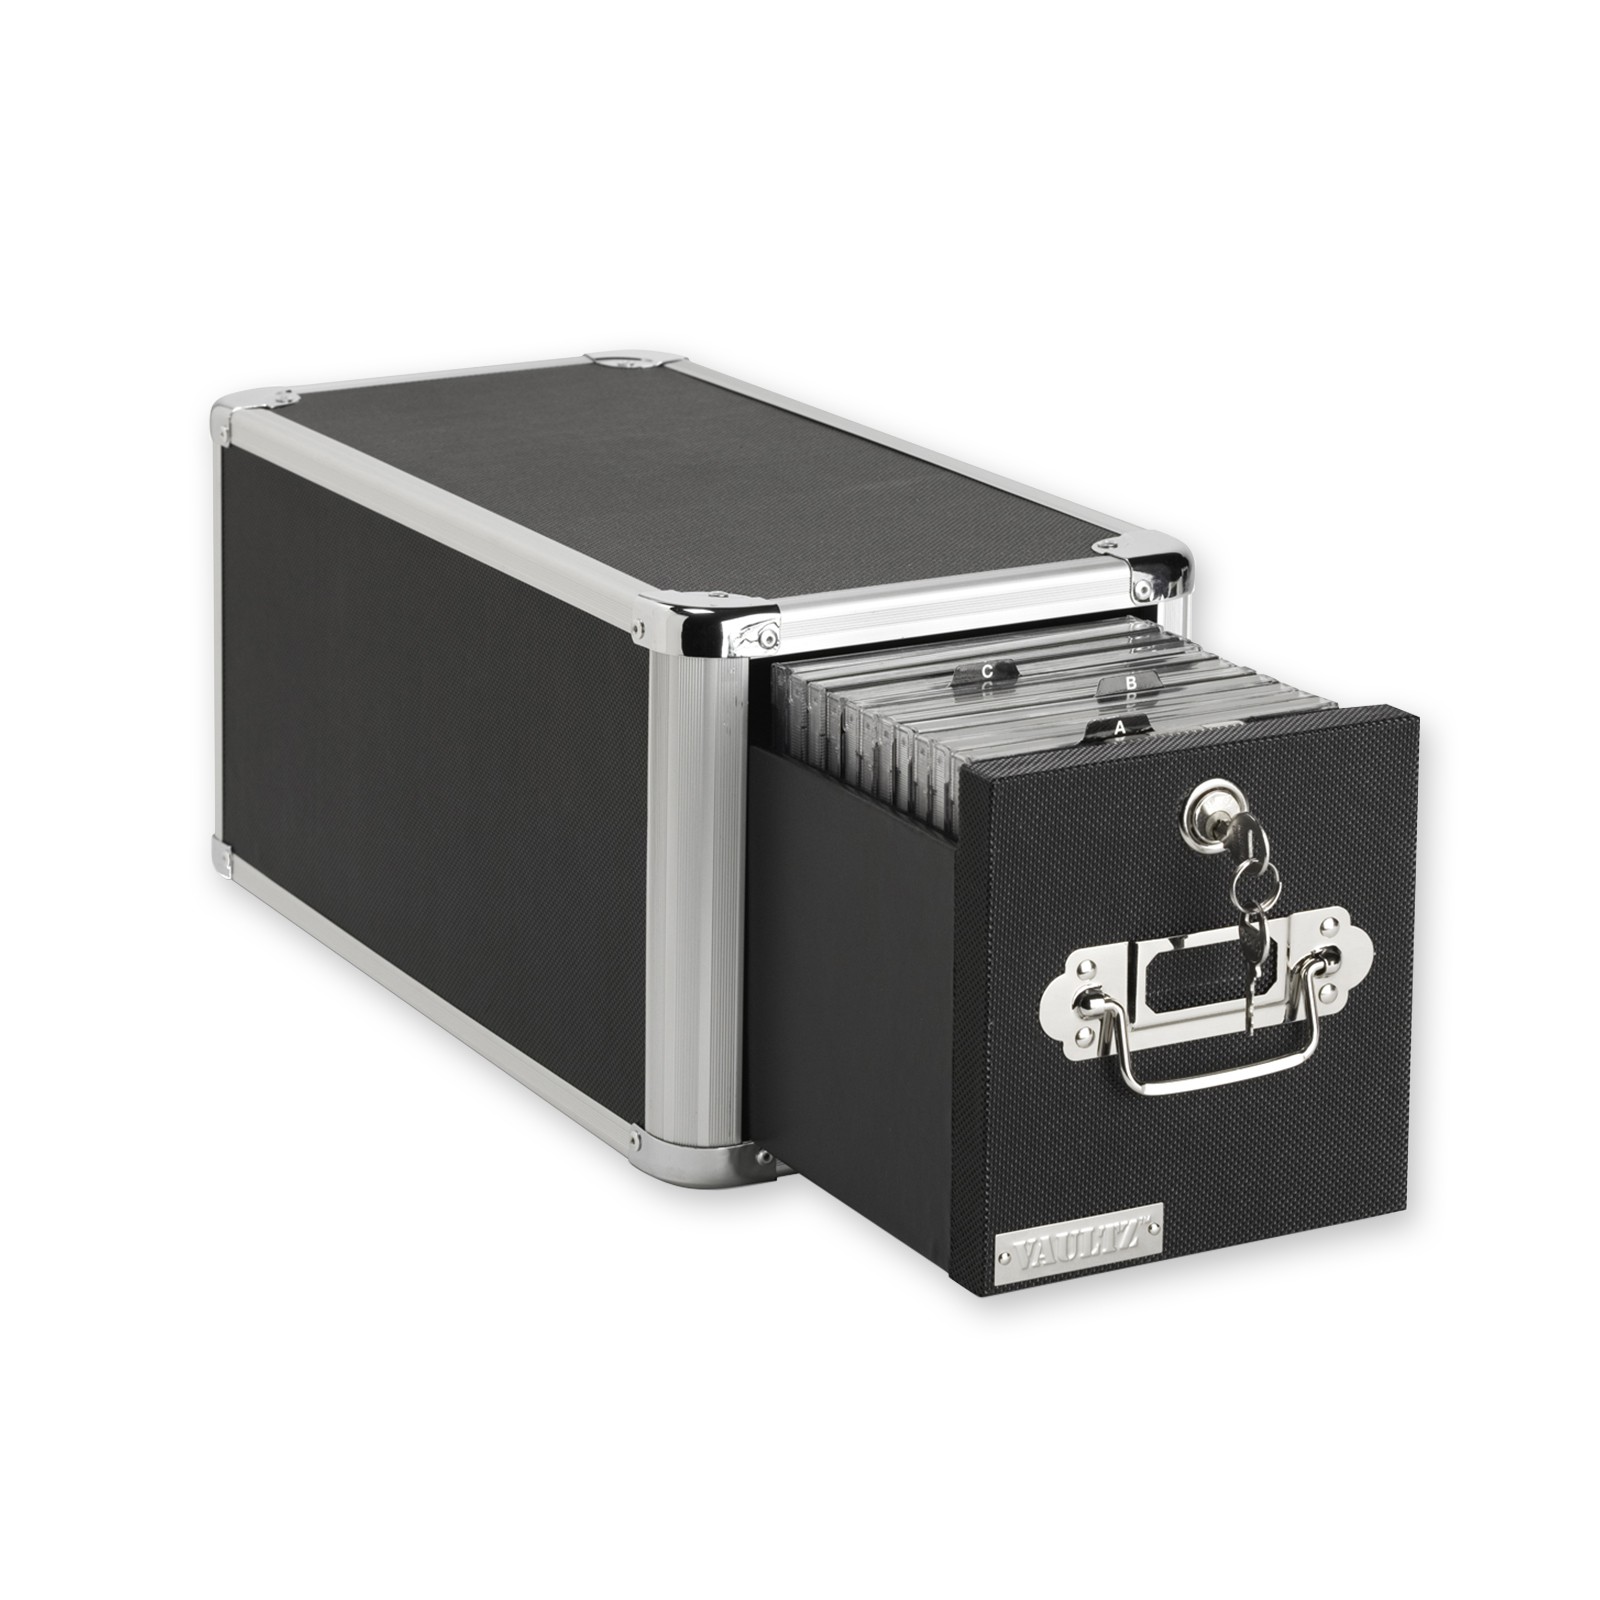 Vaultz Locking Vz01173 Single Drawer Cd File Cabinet